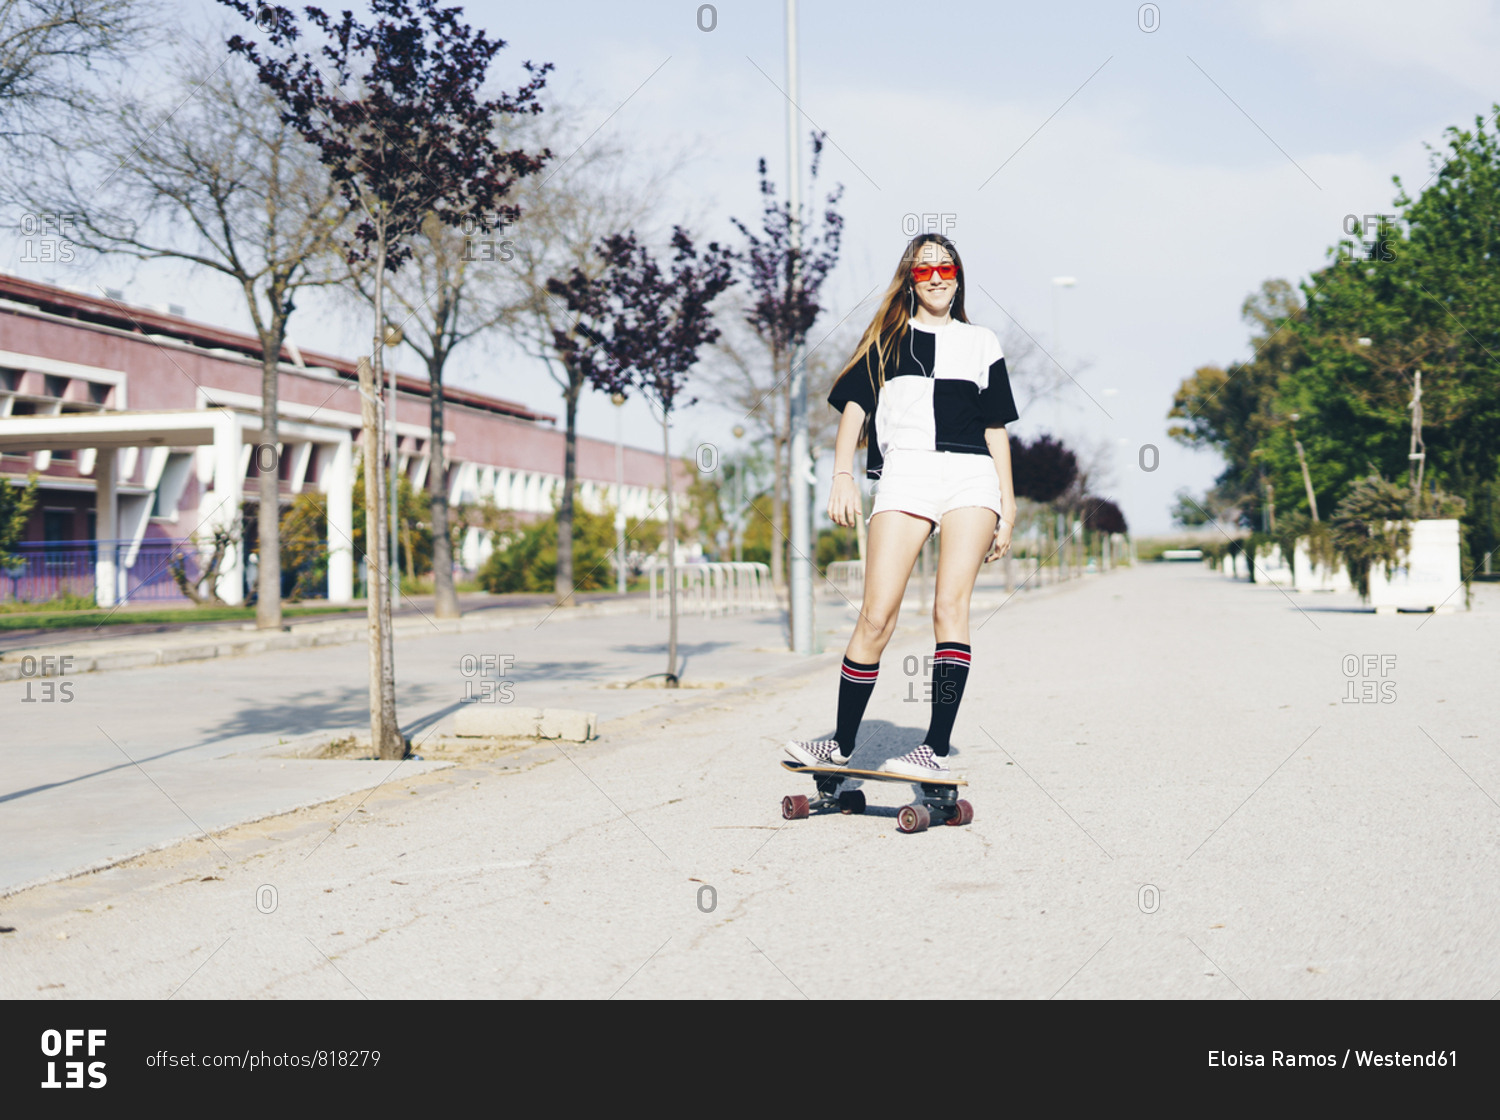 Spain- teenage girl riding skateboard on a road